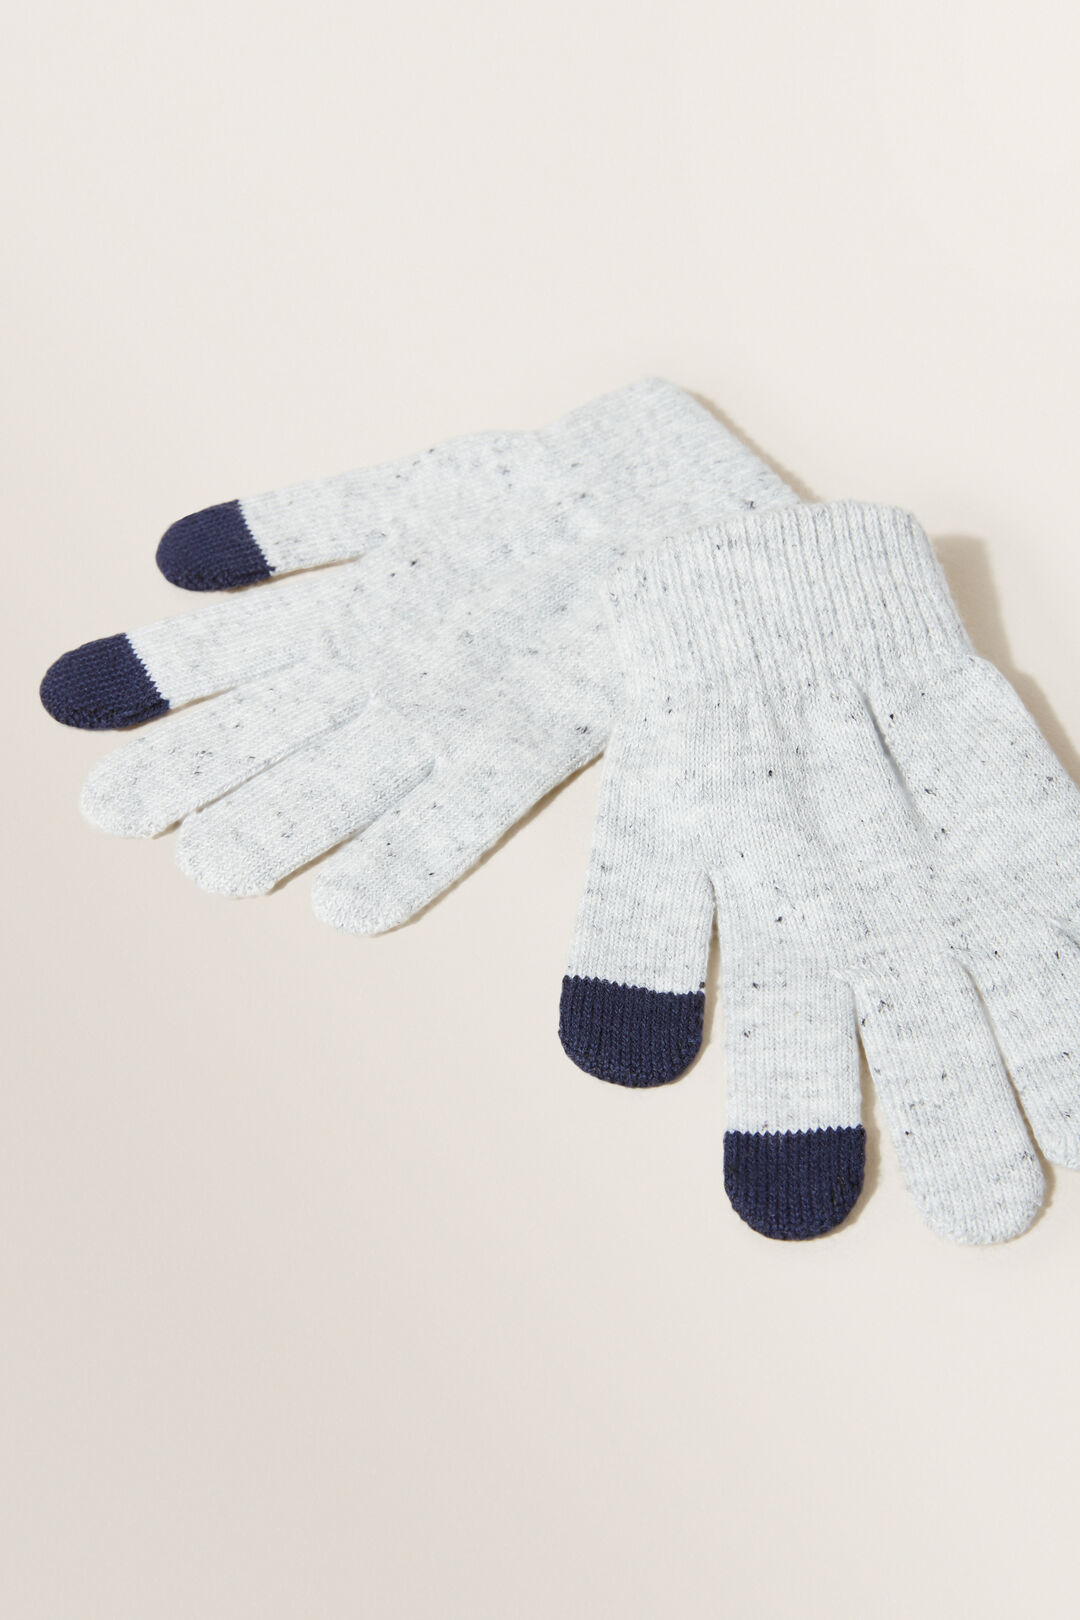 Colour Blocked Gloves  Multi  hi-res